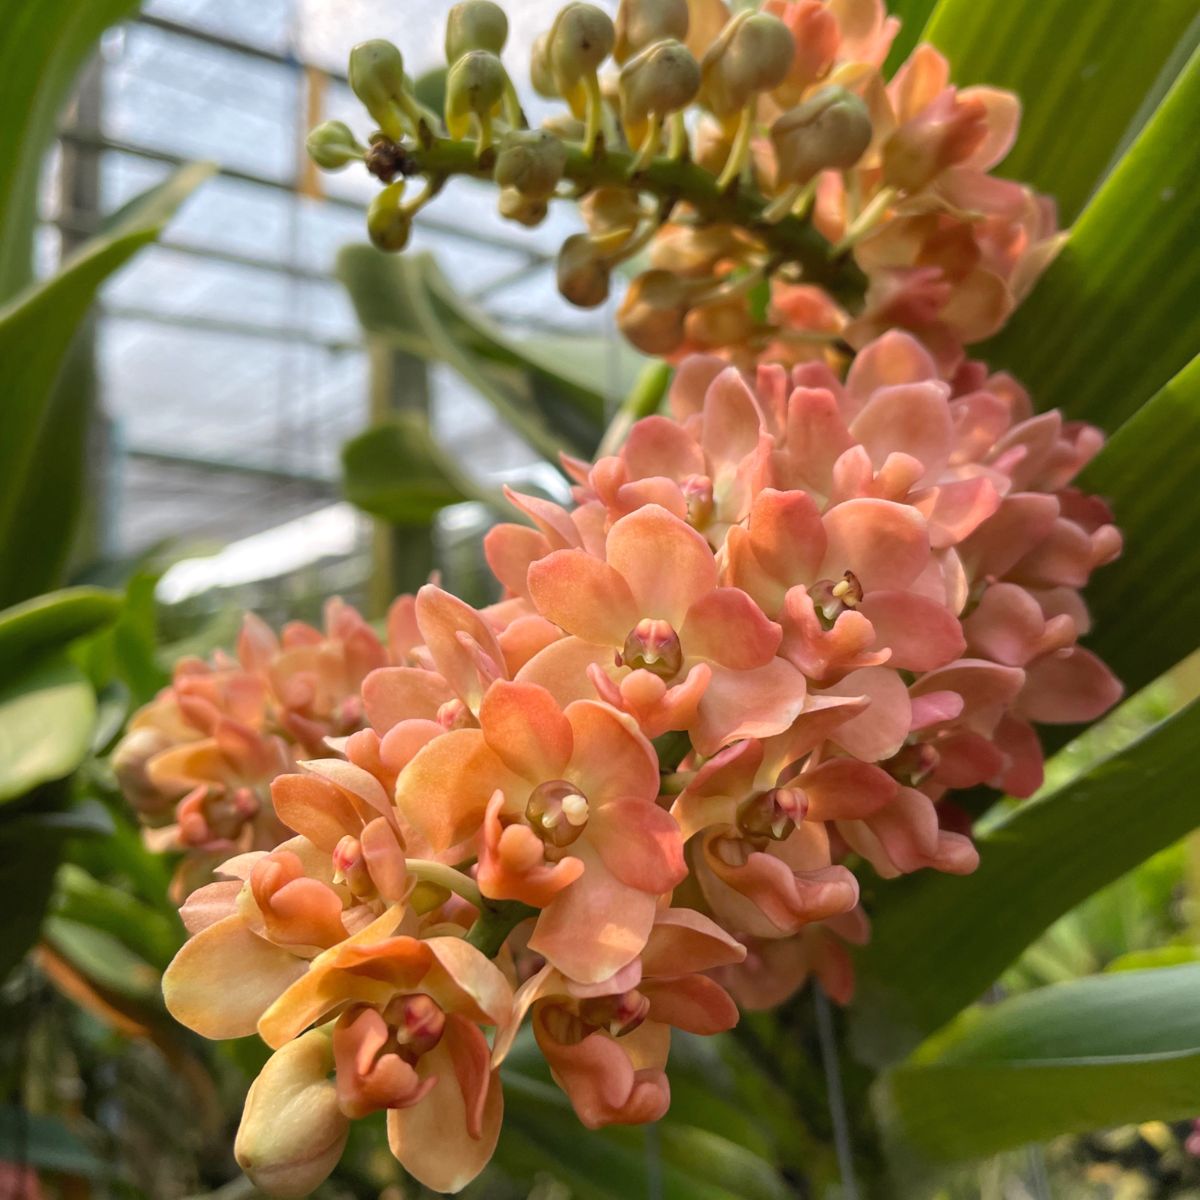 Rhynchostylis Gigantea Orange orchid with vibrant orange blooms and elegant petals